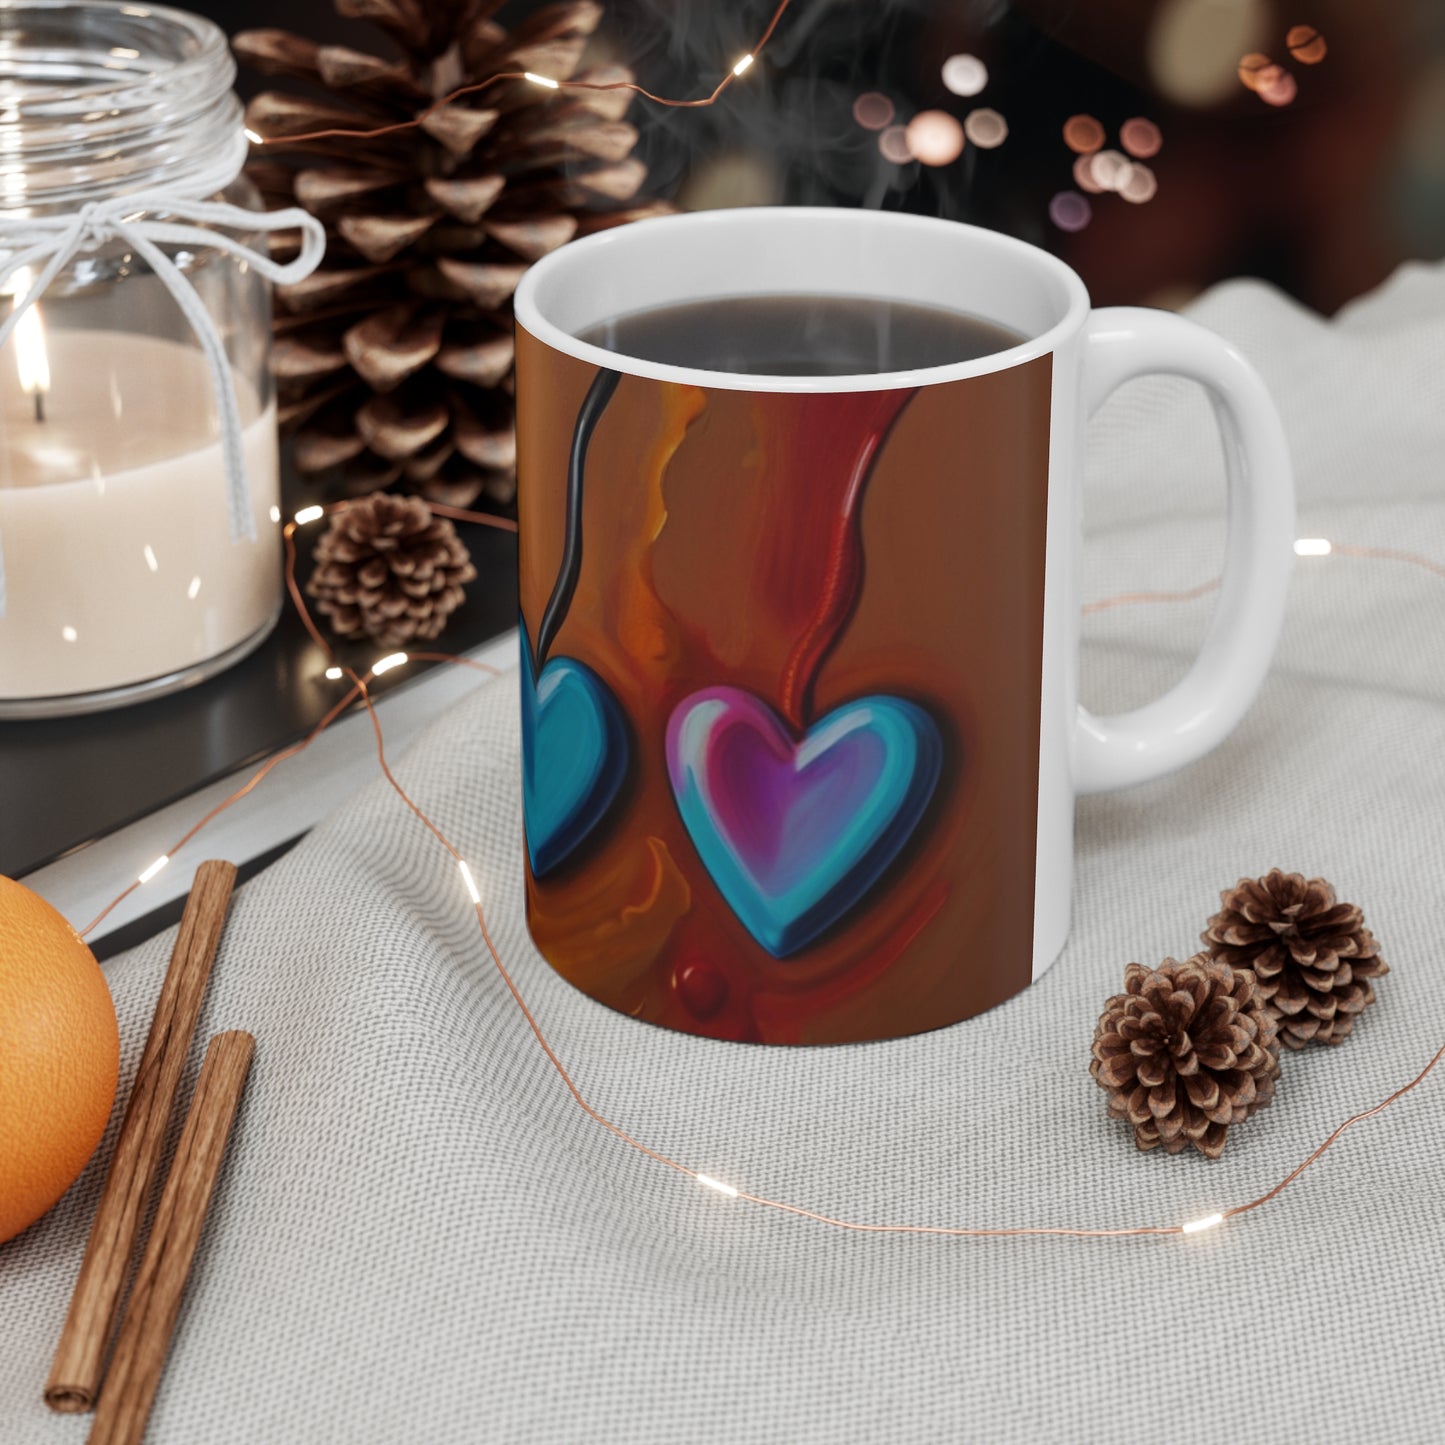 Four Love Hearts On Strings Mugs - Ceramic Coffee Mug 11oz